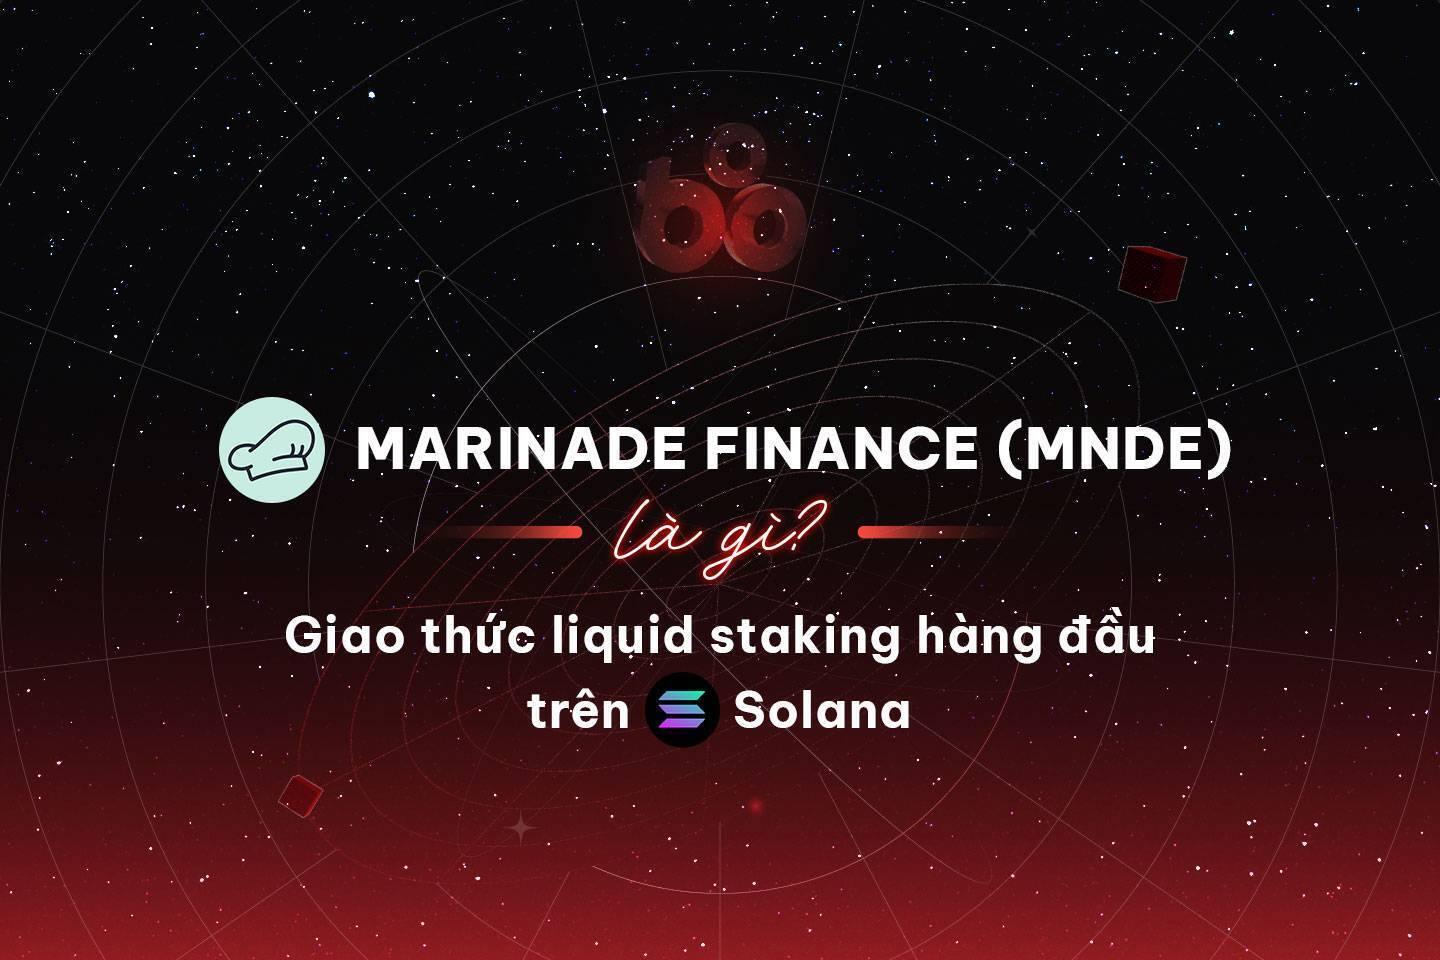 marinade-finance-mnde-la-gi-giao-thuc-liquid-staking-hang-dau-tren-solana